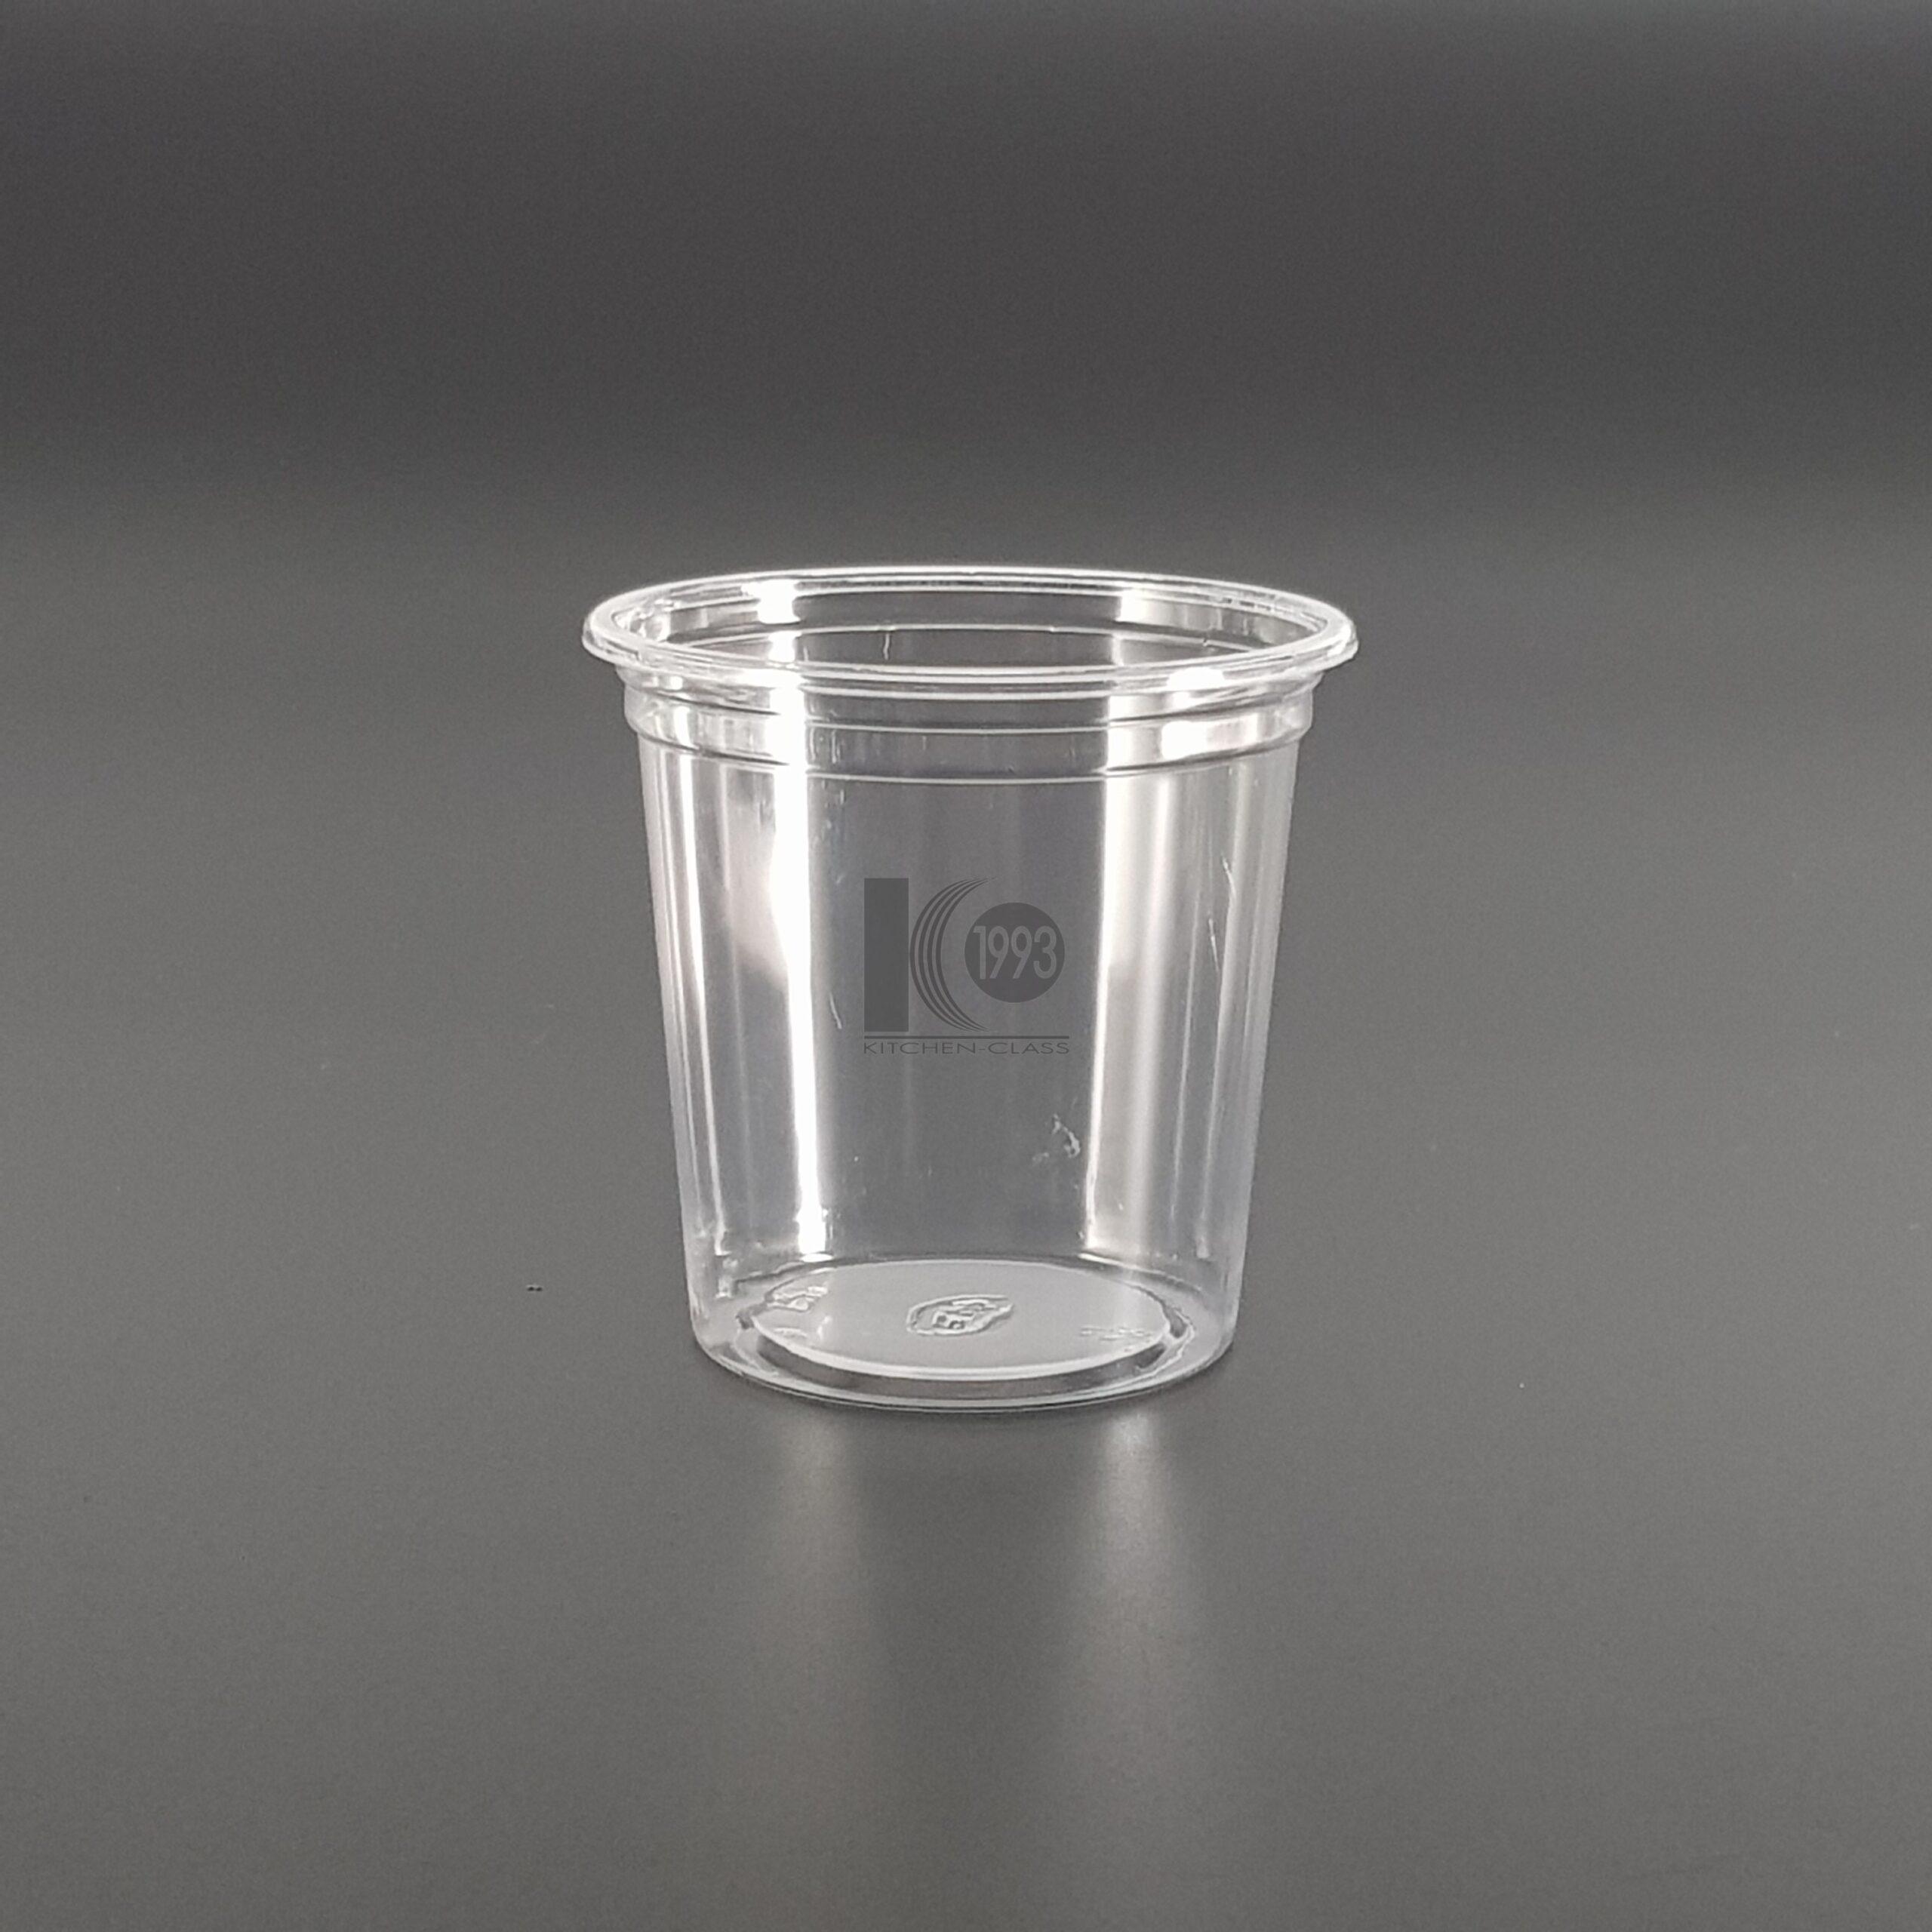 6 oz Clear Single Serve Cup